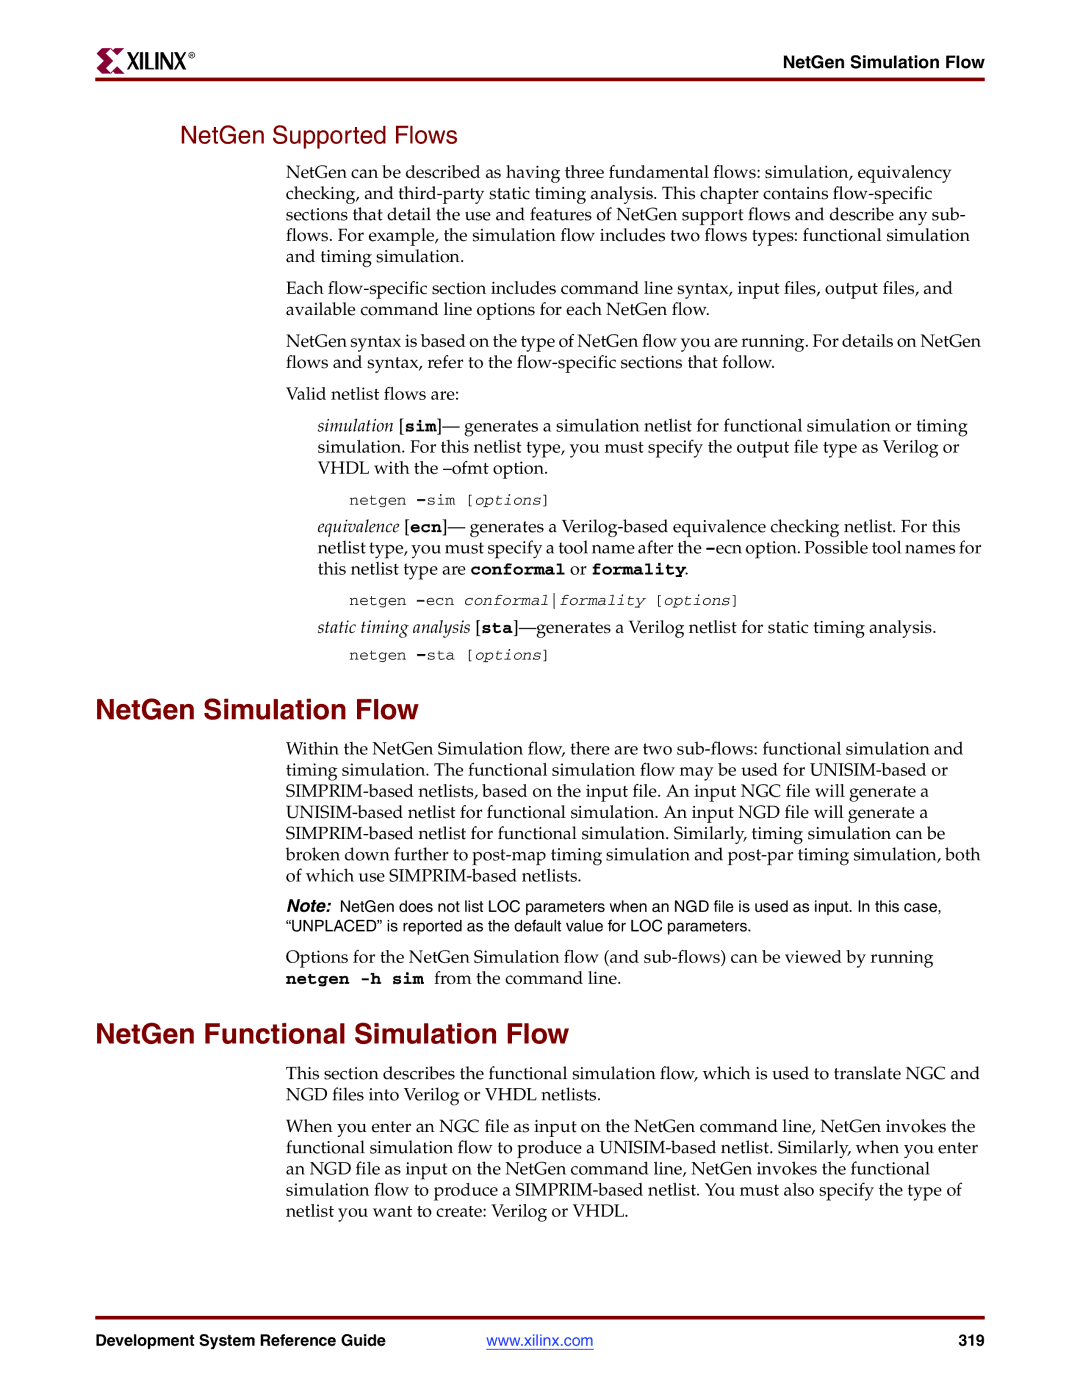 Xilinx 8.2i manual NetGen Simulation Flow, NetGen Functional Simulation Flow, NetGen Supported Flows 